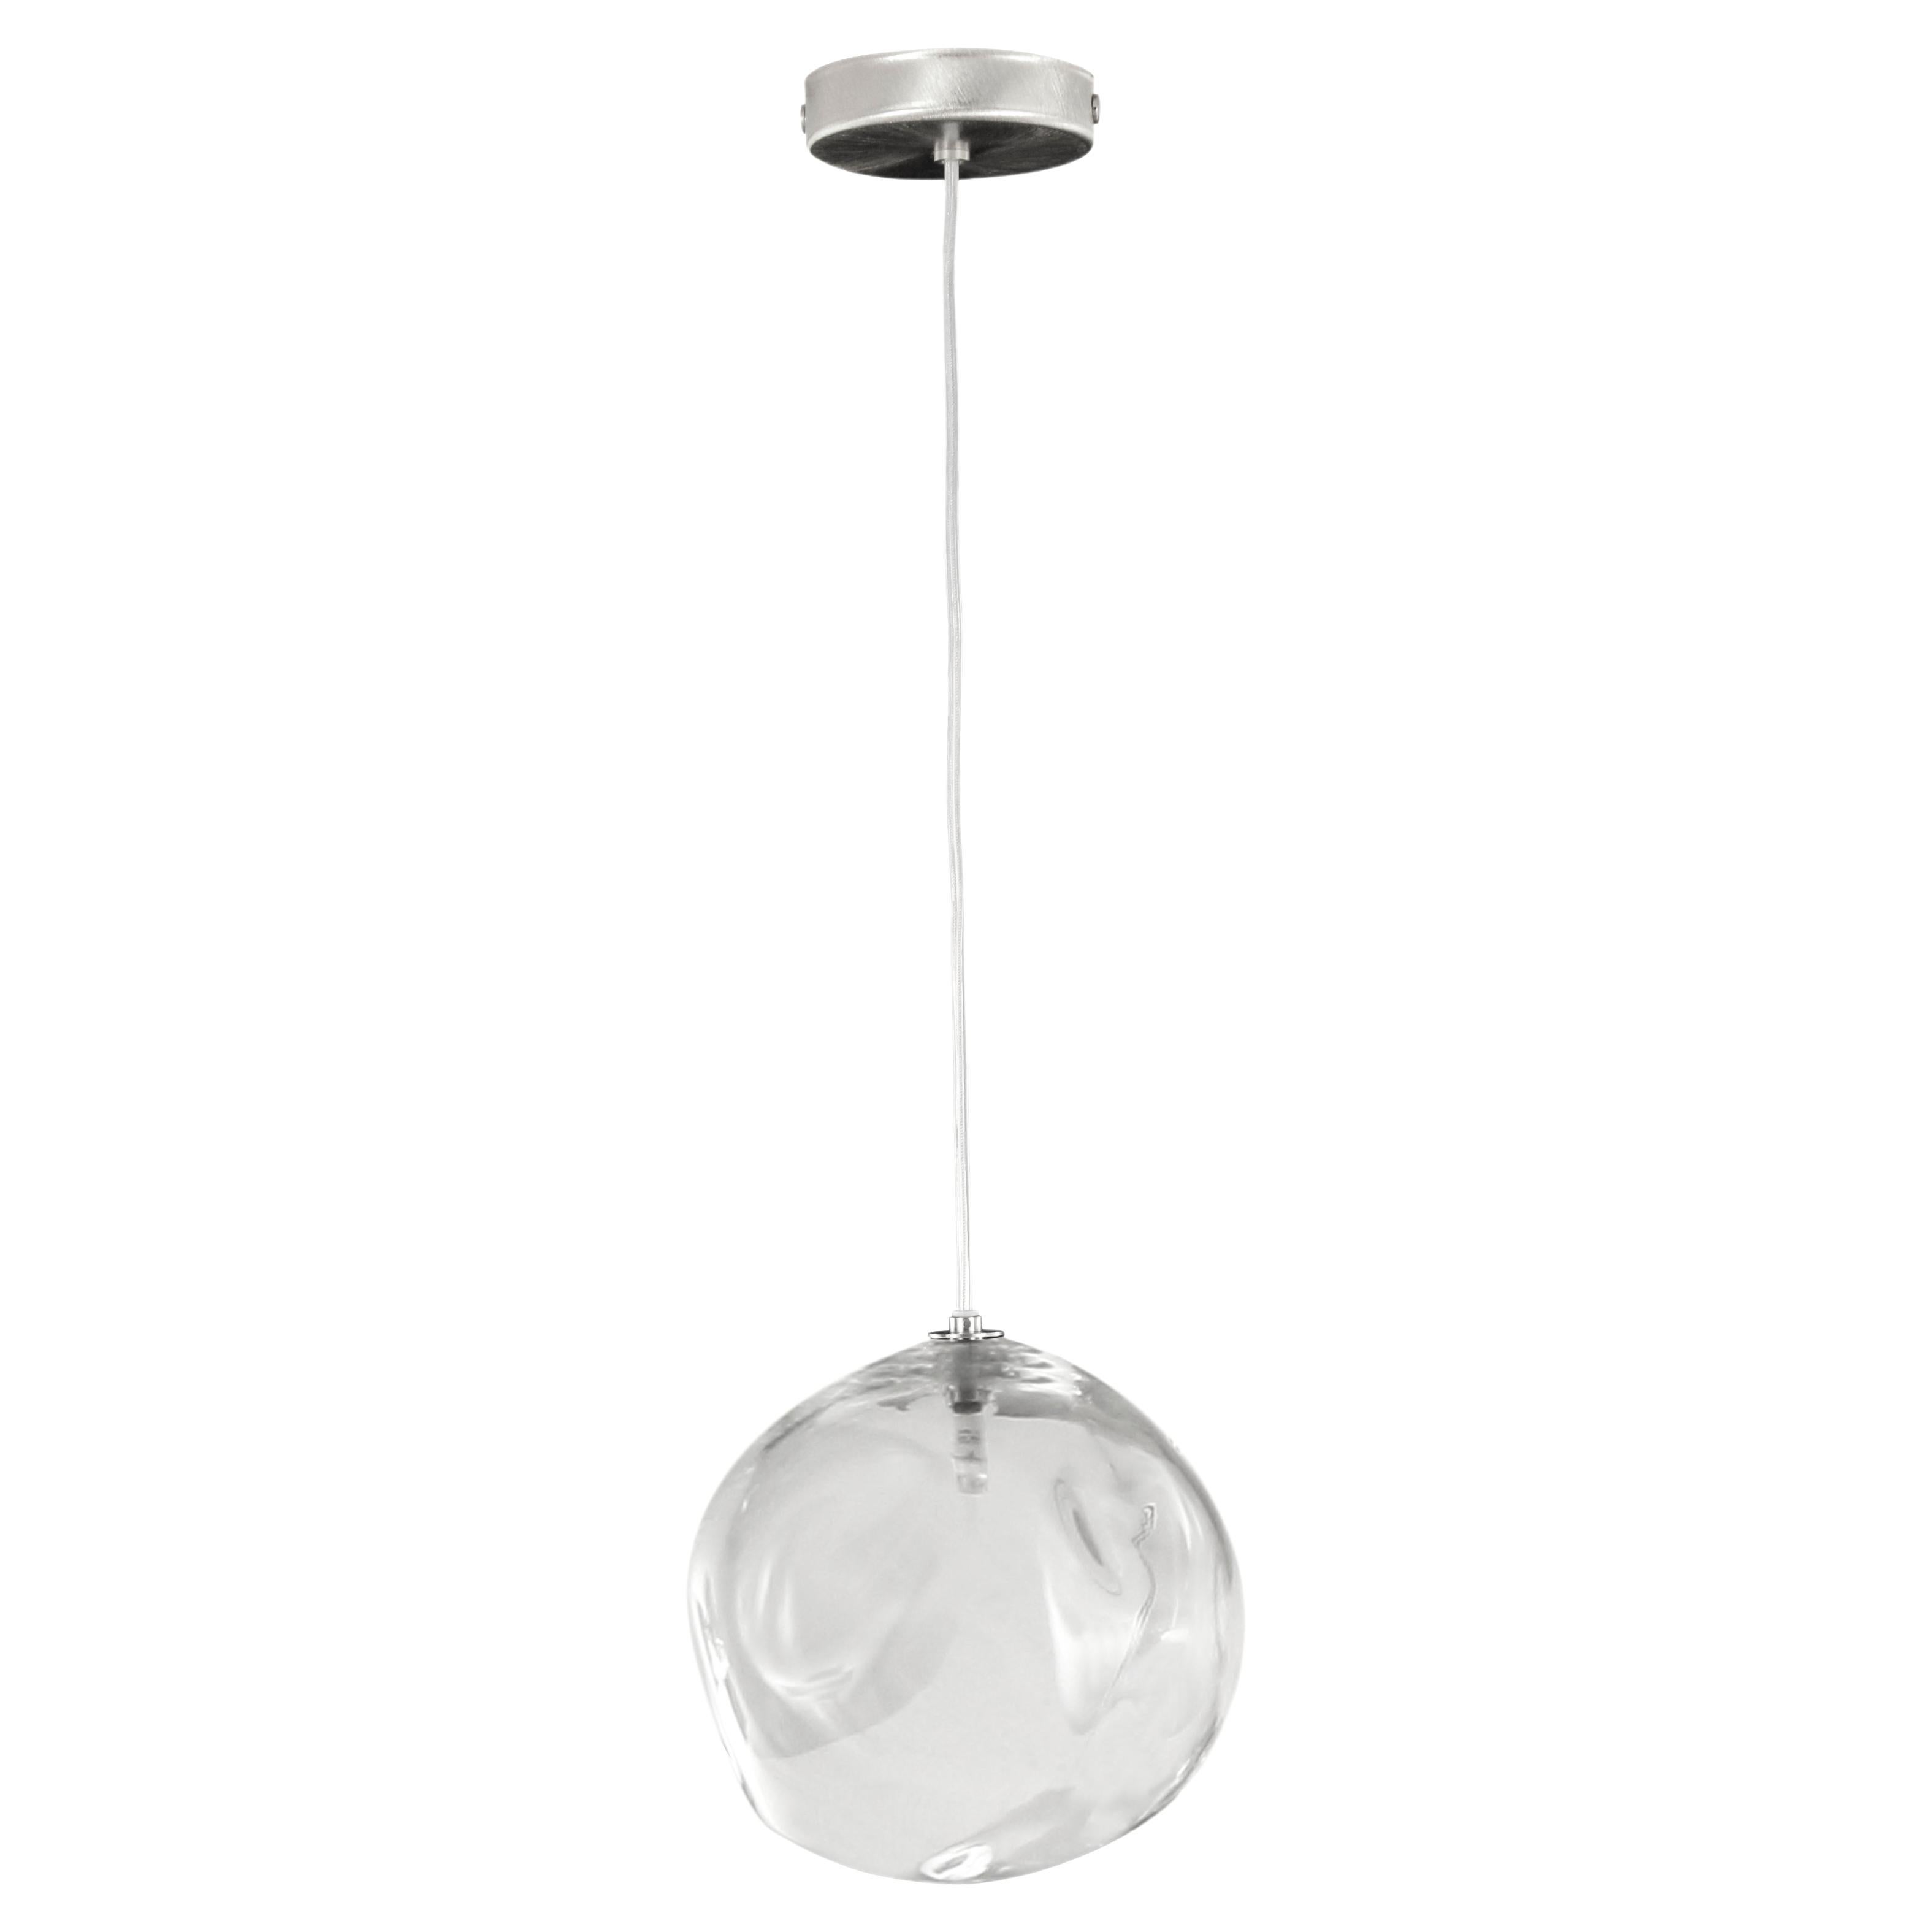 Artistic Suspension 1 Light, Sphere Clear Murano Glass Desafinado by Multiforme For Sale